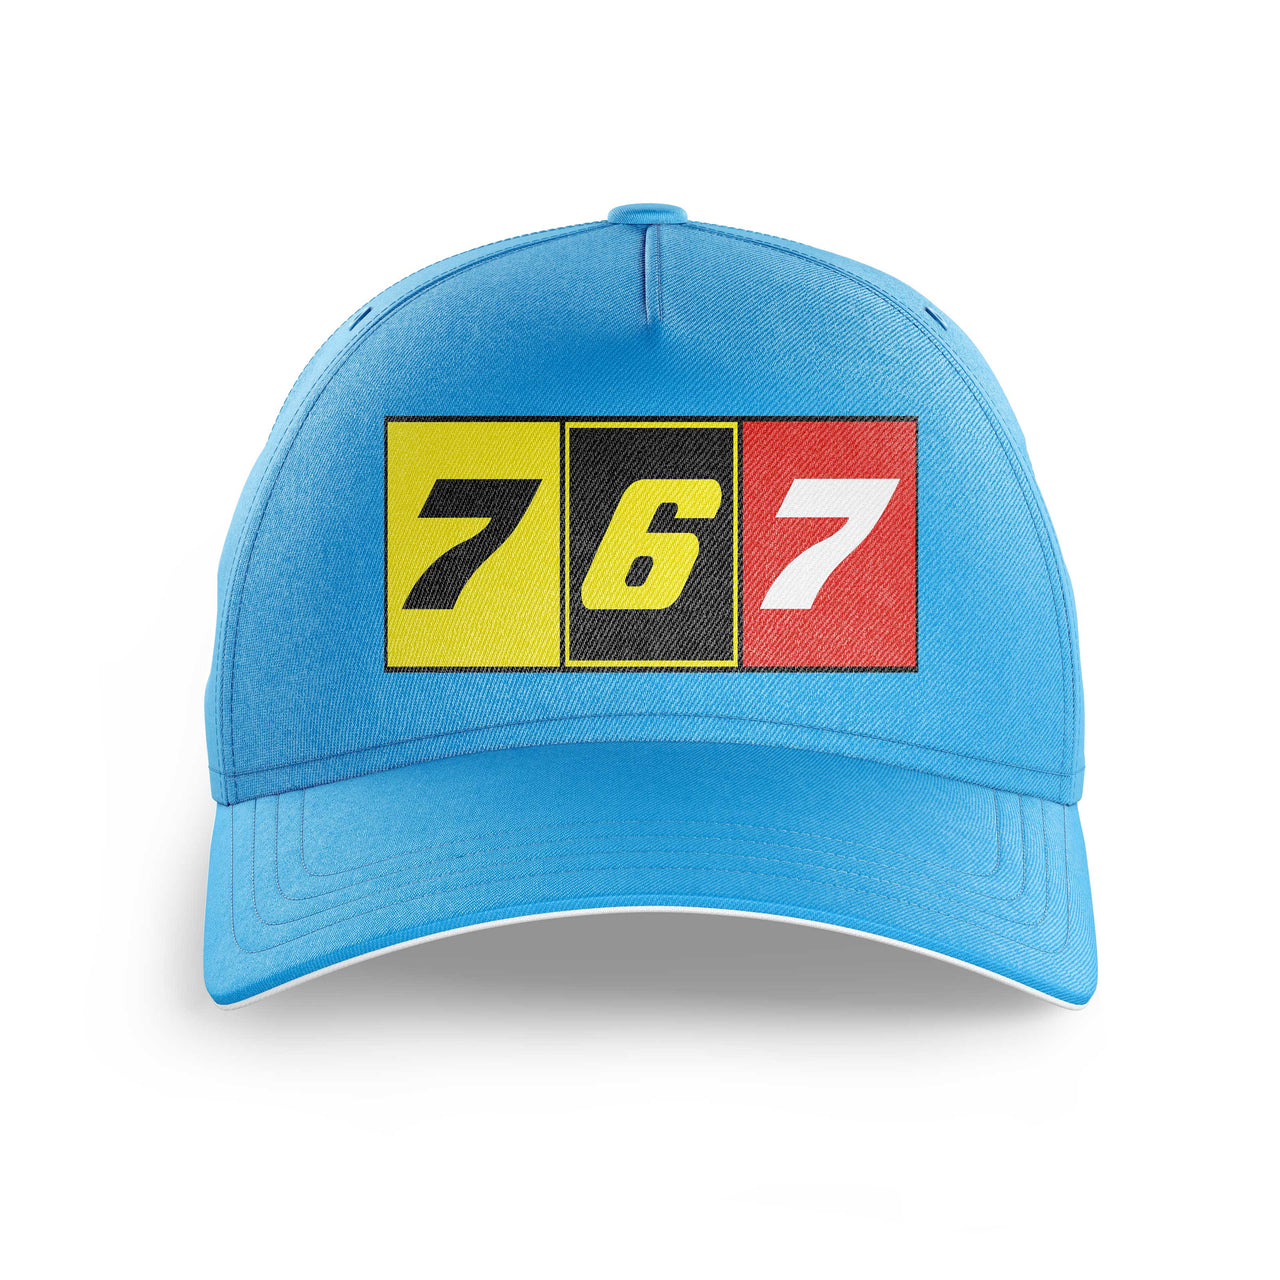 Flat Colourful 767 Printed Hats